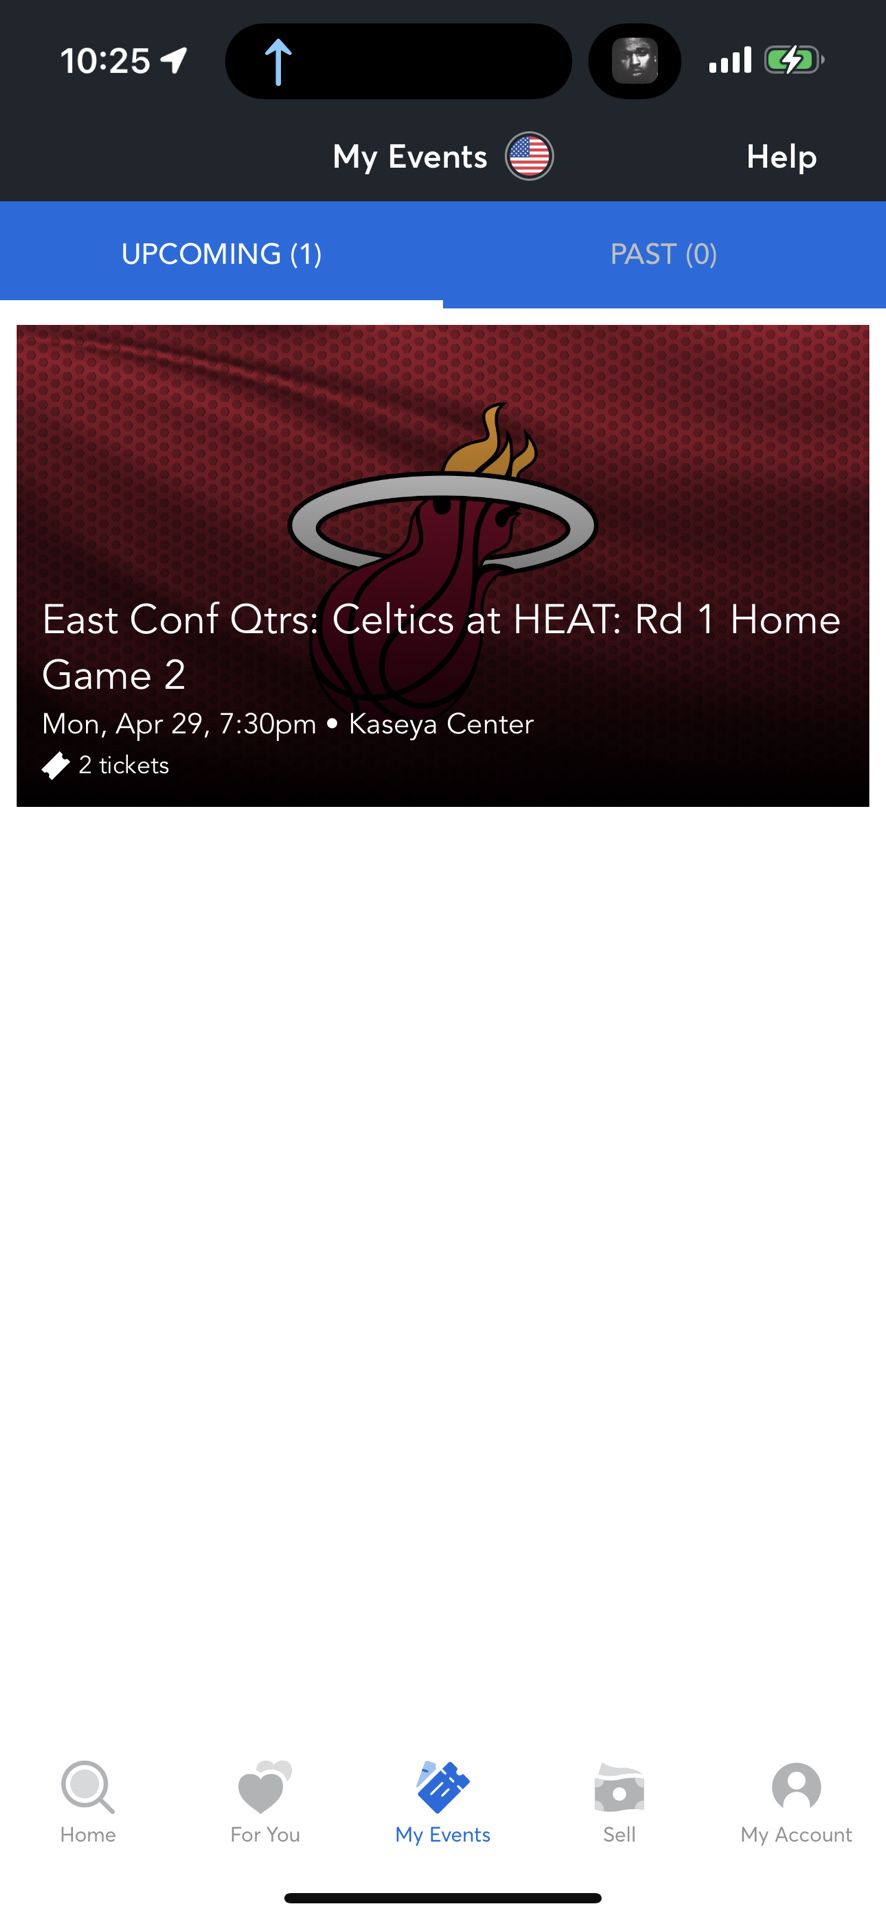 (2) Miami Heat Playoff Tickets Game 4 ROW 1🔥